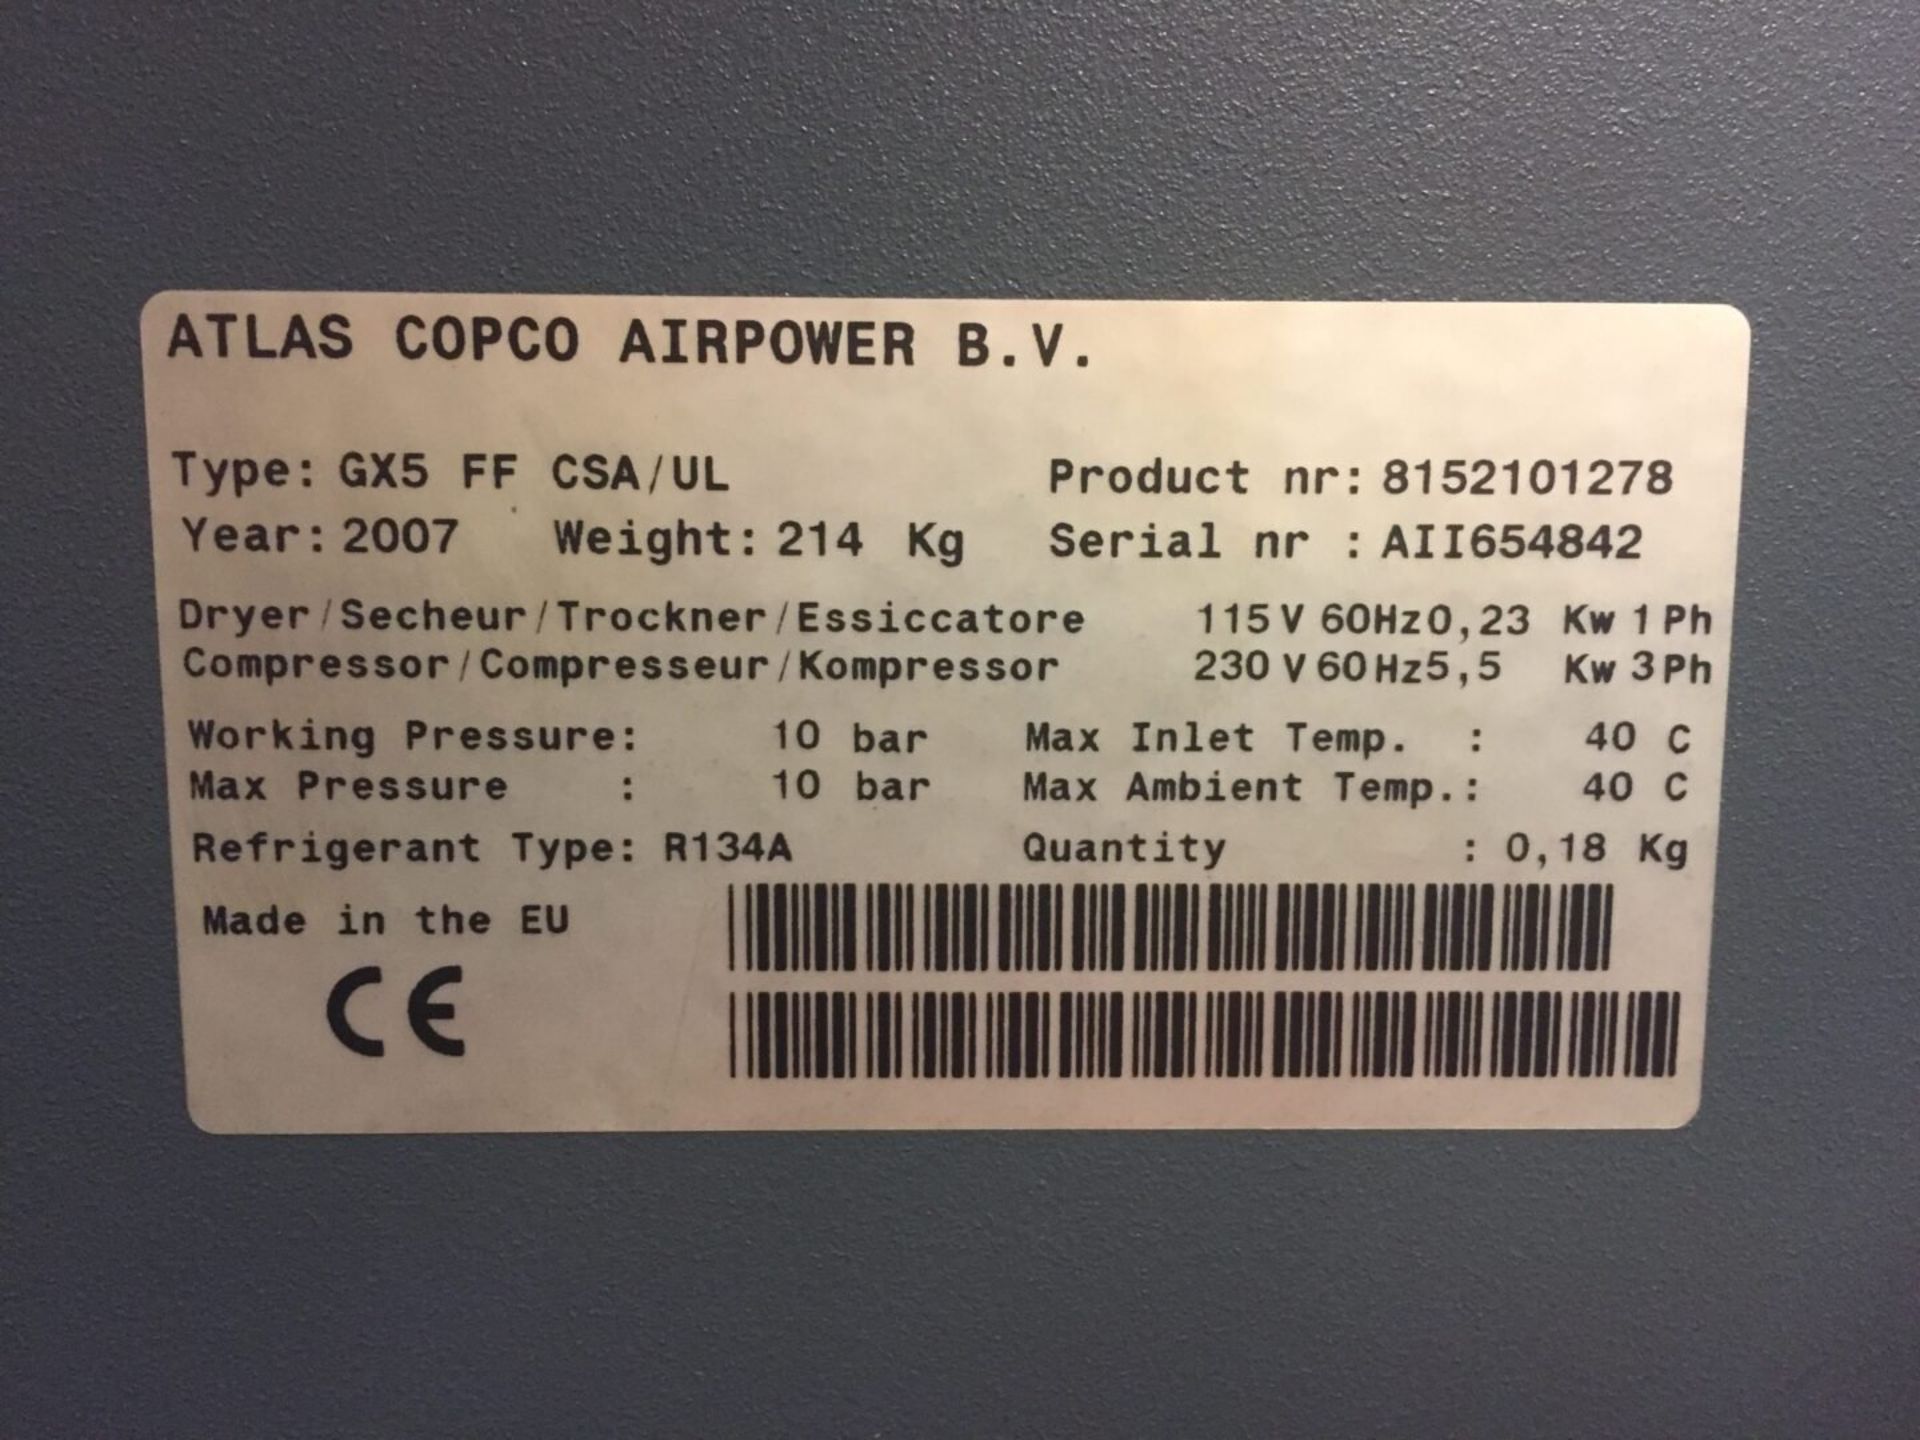 Atlas Copco GX5-FF 7.5 hp Rotary Screw Air Compressor, S/N AII654842 - Image 11 of 11